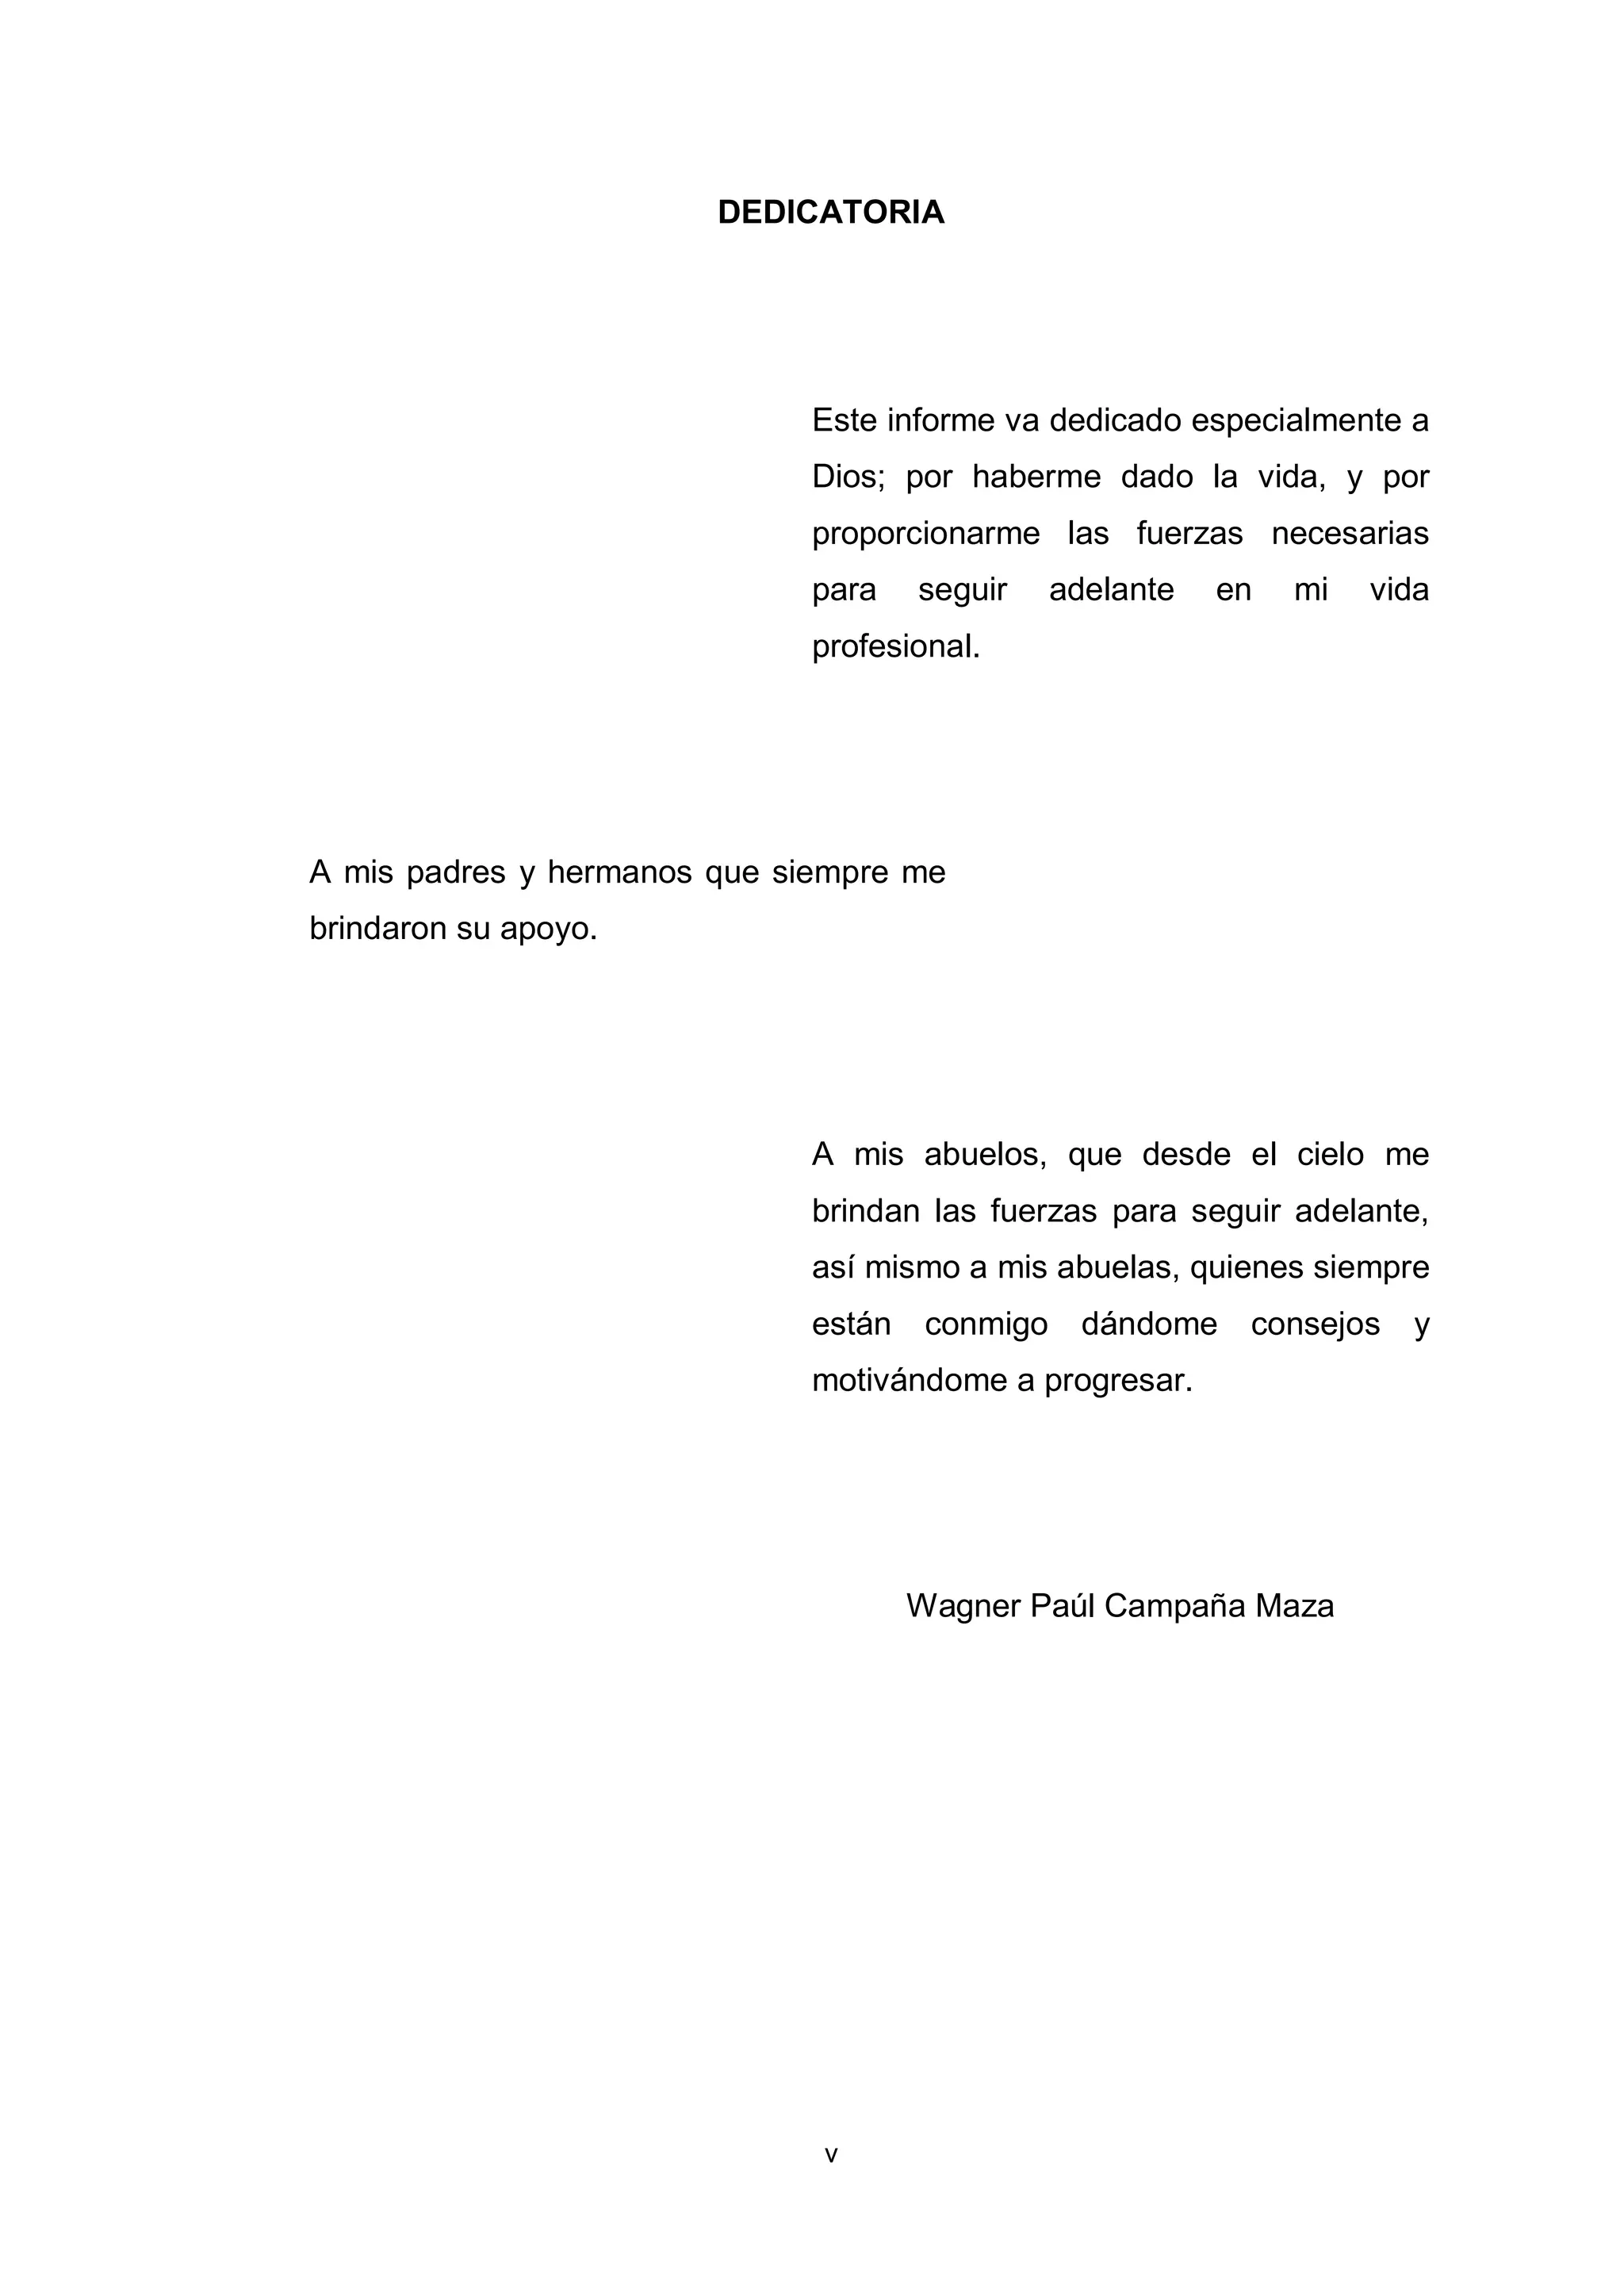 TESIS - CAMPAÑA MAZA (1).pdf